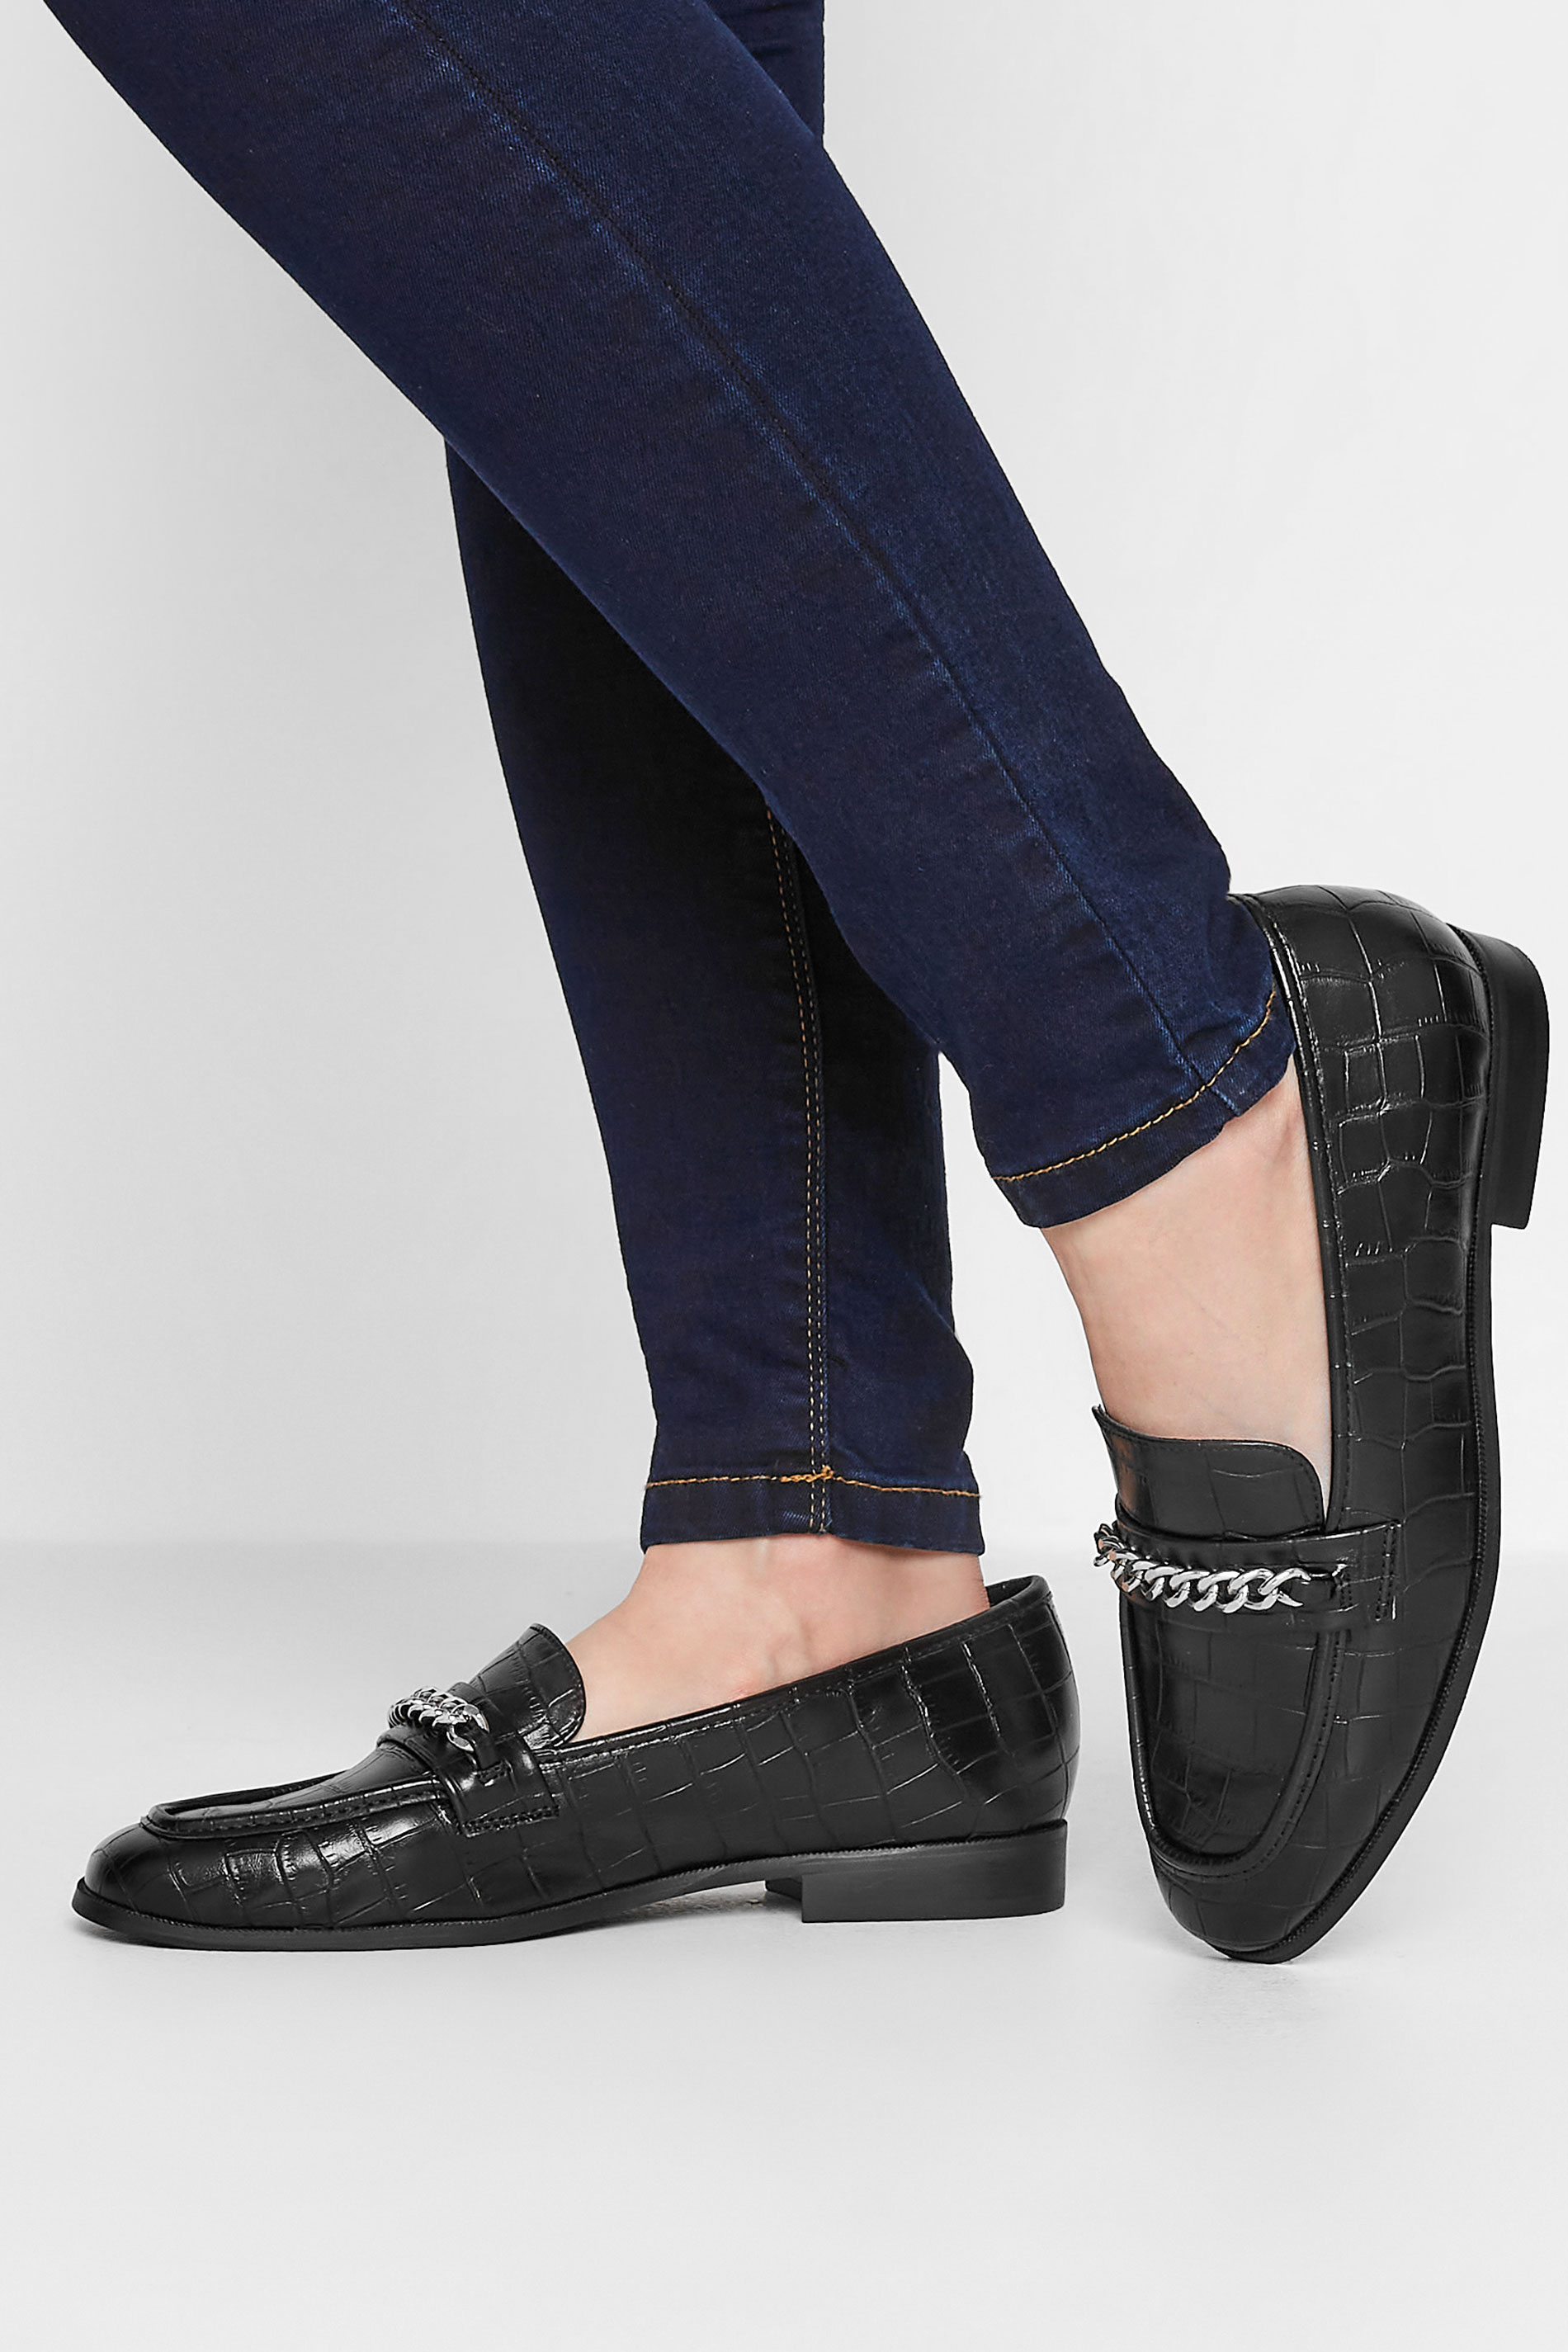 LTS Black Croc Chain Detail Loafers In Standard D Fit_M.jpg